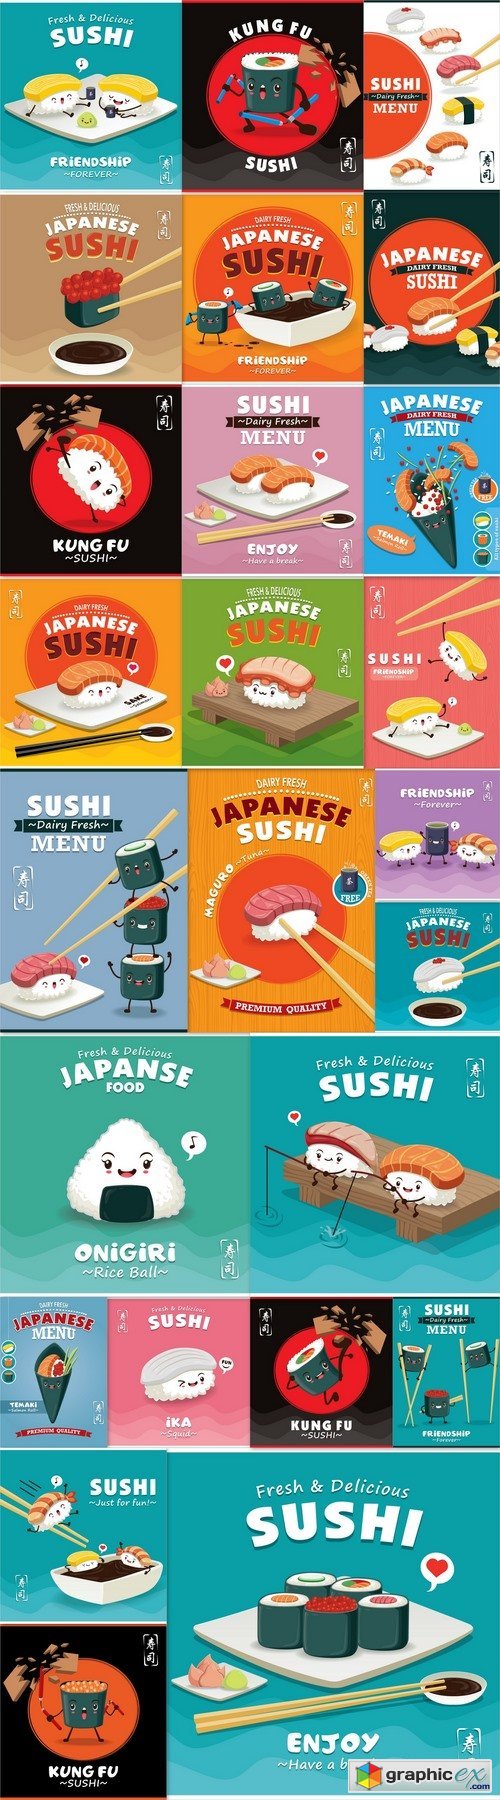 Sushi poster design 2